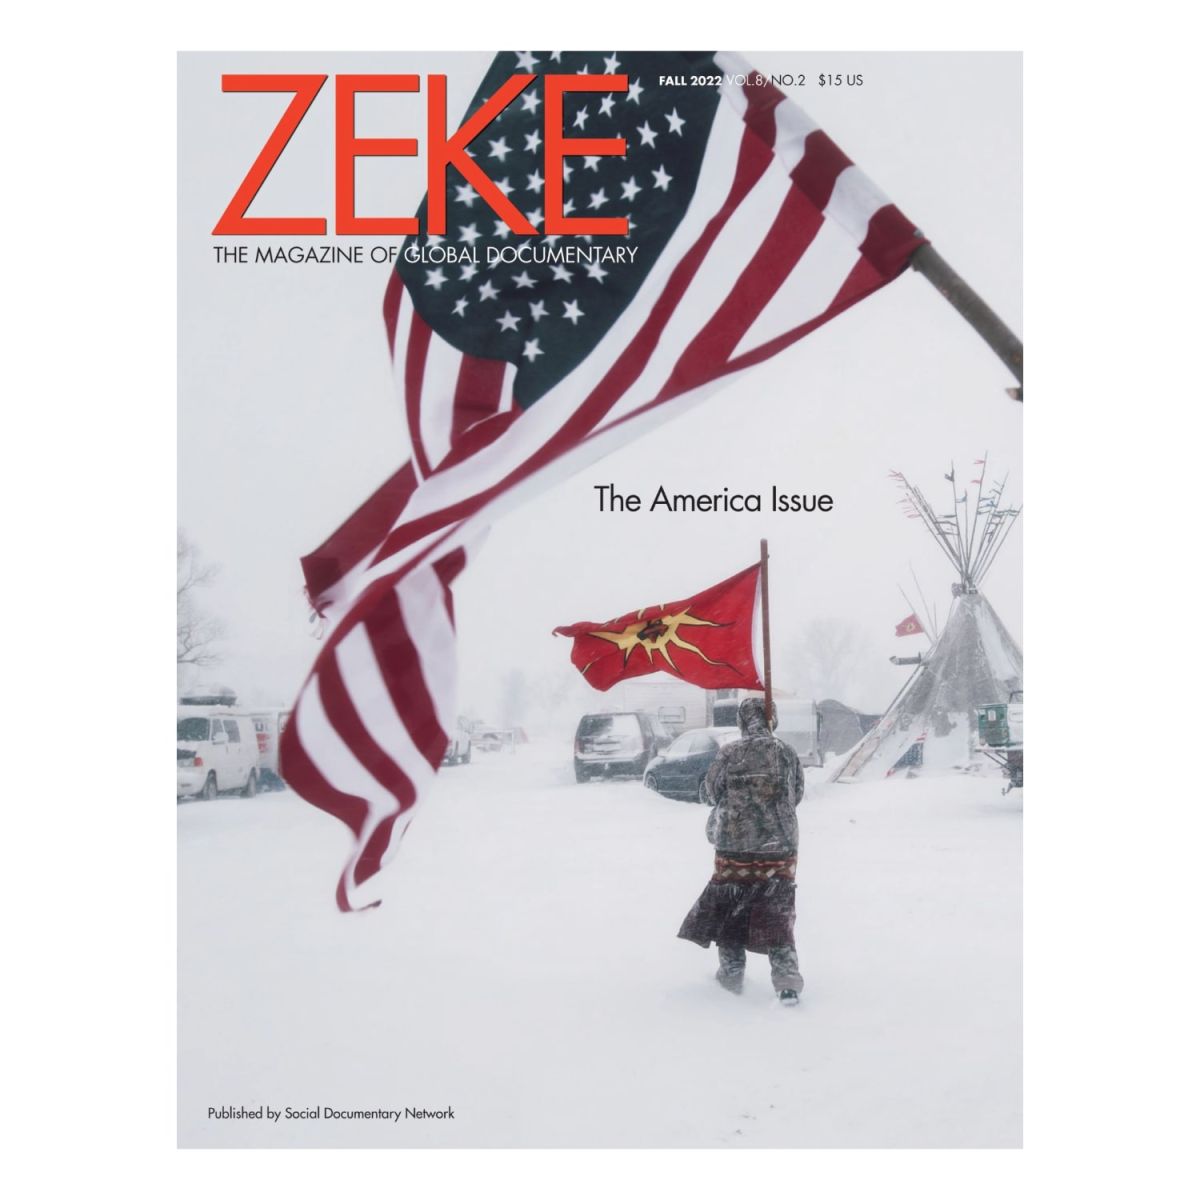 ZEKE The magazine of global documentary - Fall 2022 Vol.8 No.2